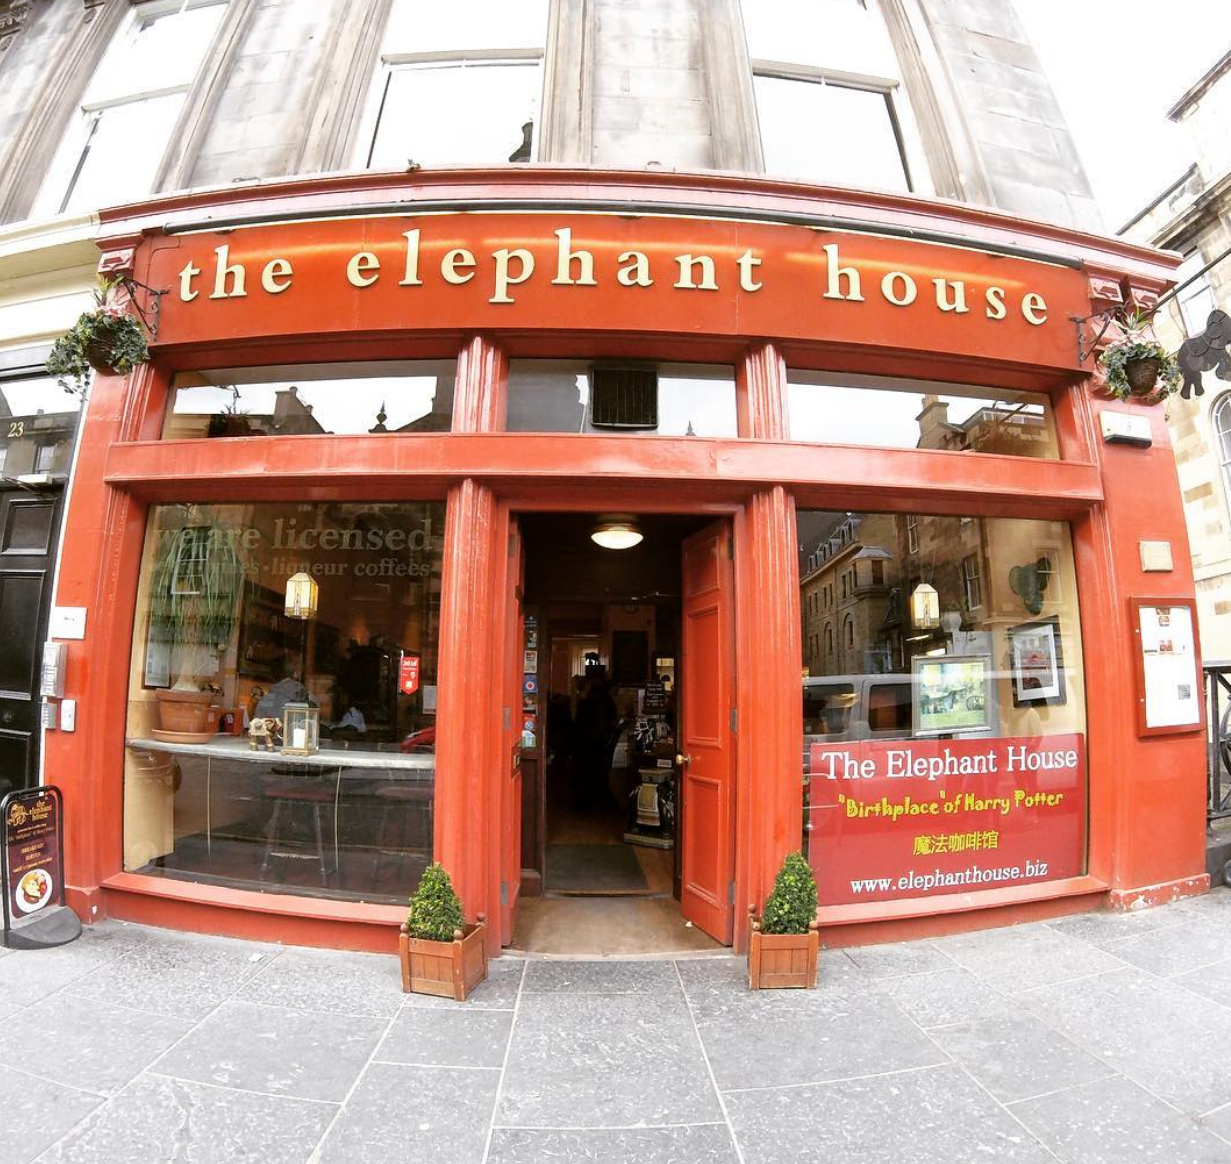 The Elephant house